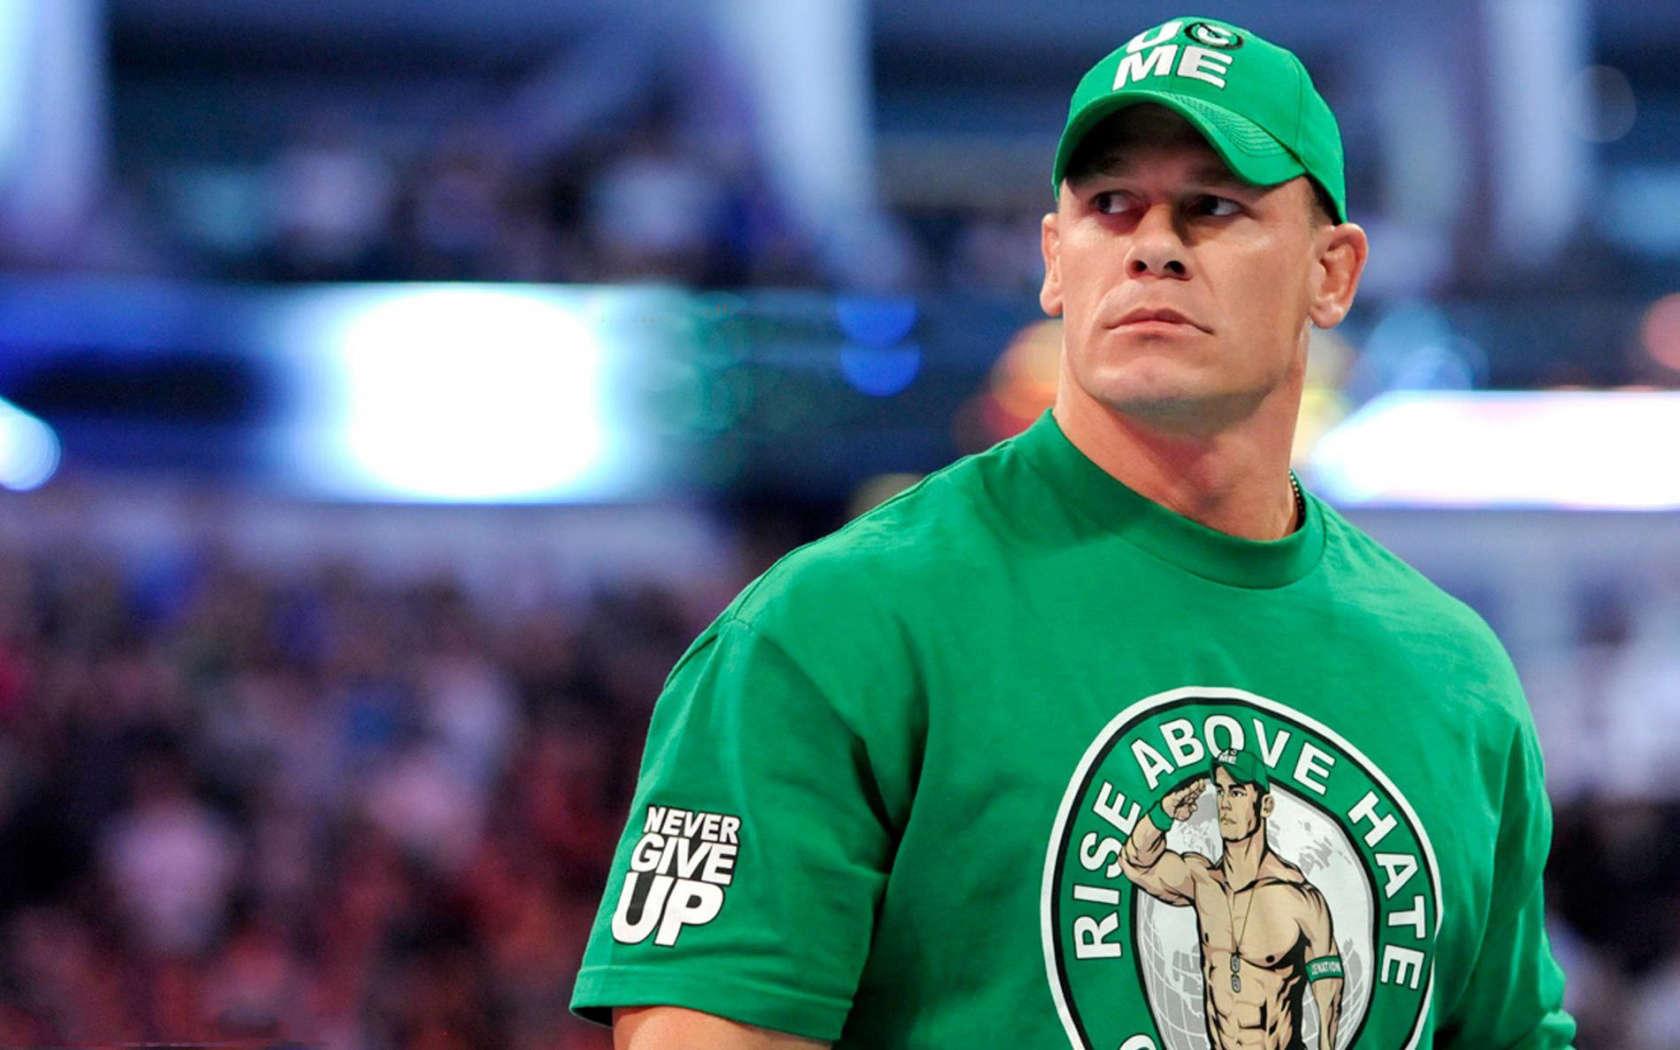 WWE Superstar John Cena Wallpaper HD Picture